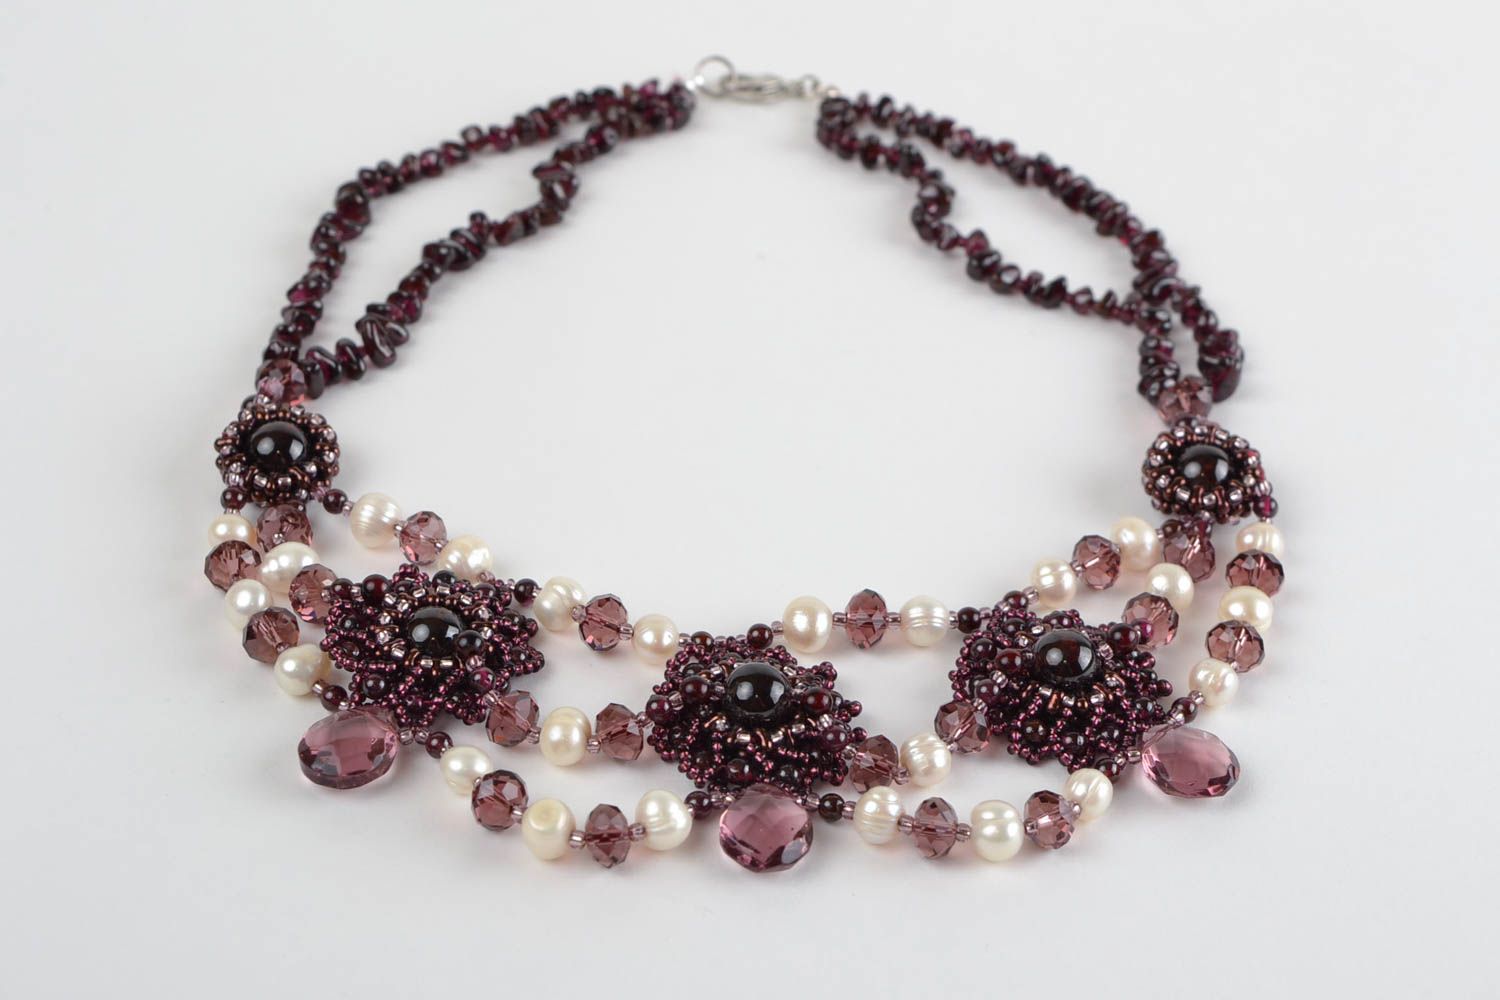 Handmade dark woven volume beaded women's designer necklace with natural stones photo 3